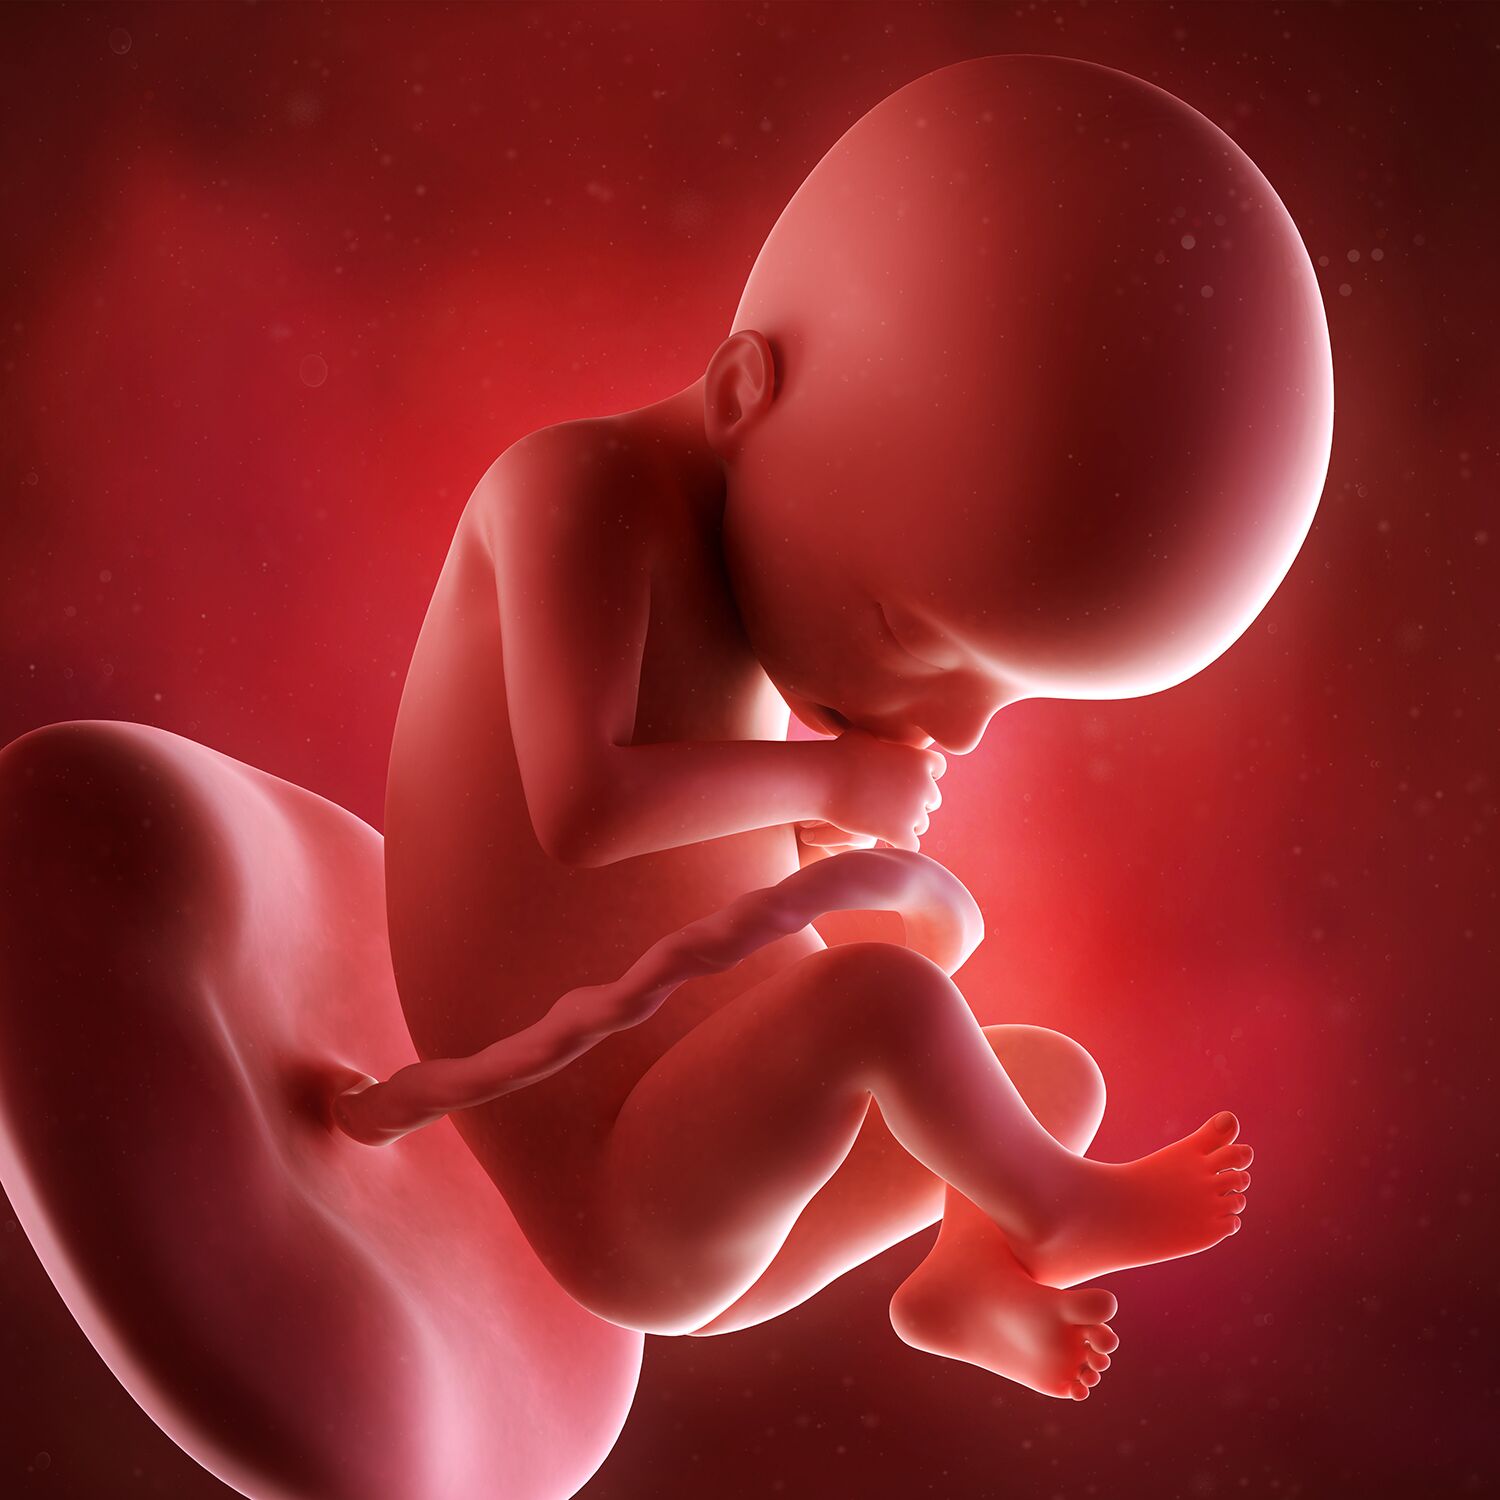 22 неделе плацента. Плод на 22 неделе беременности. Зародыш на 22 недели беременности. Ребёнок в 22 недели беременности. Младенец 22 недели беременности.